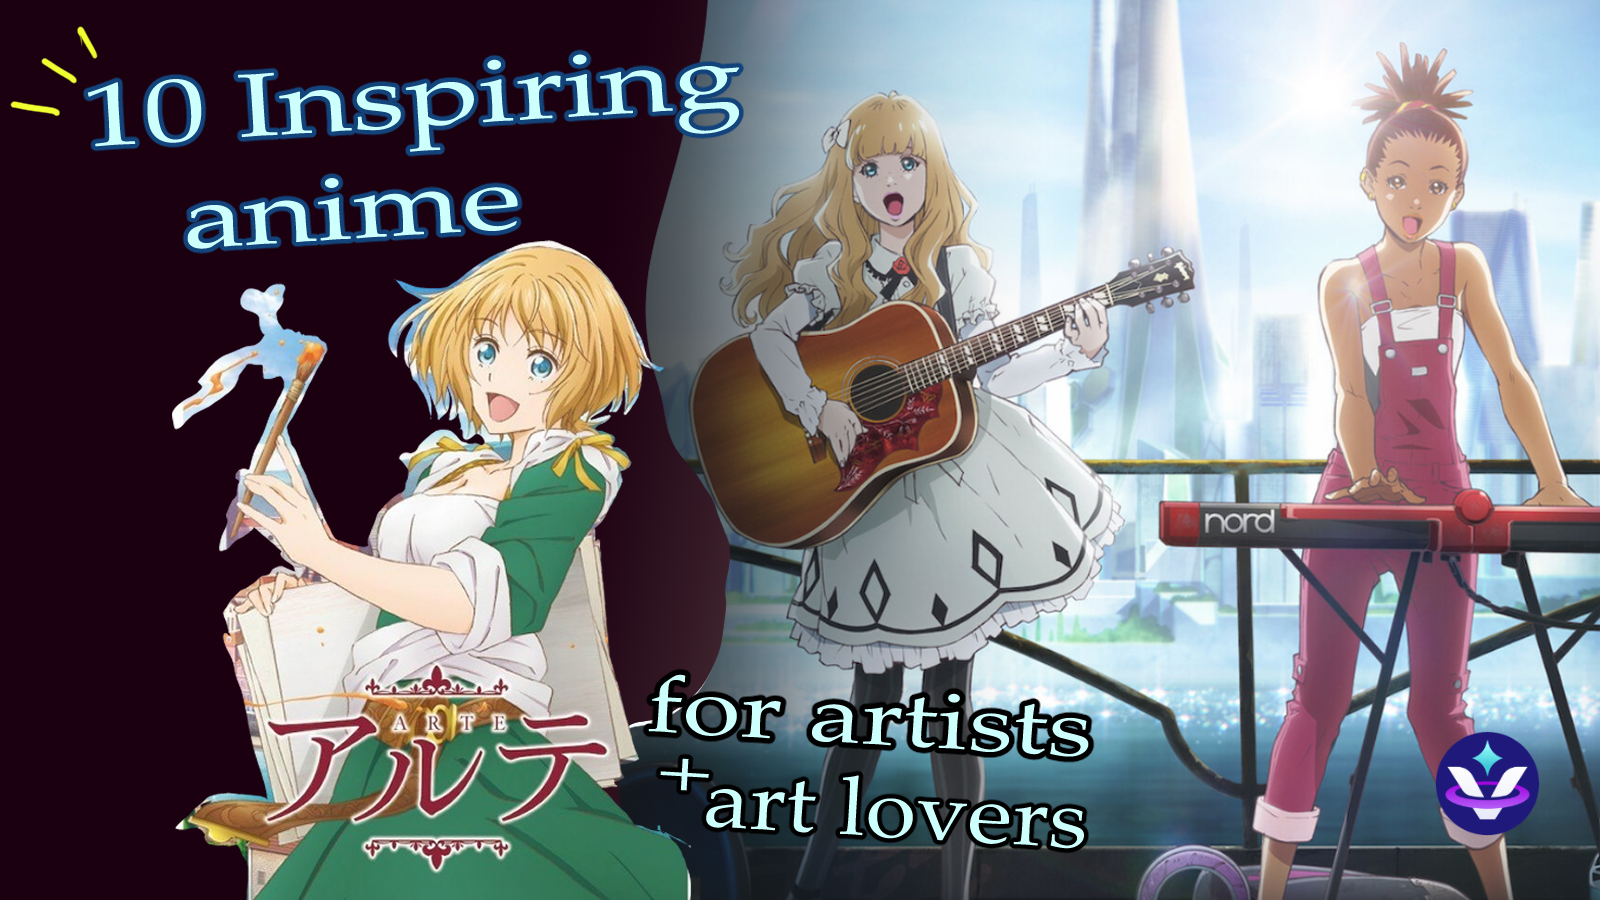 10 Inspiring Anime for Artists and Art Lovers Alike